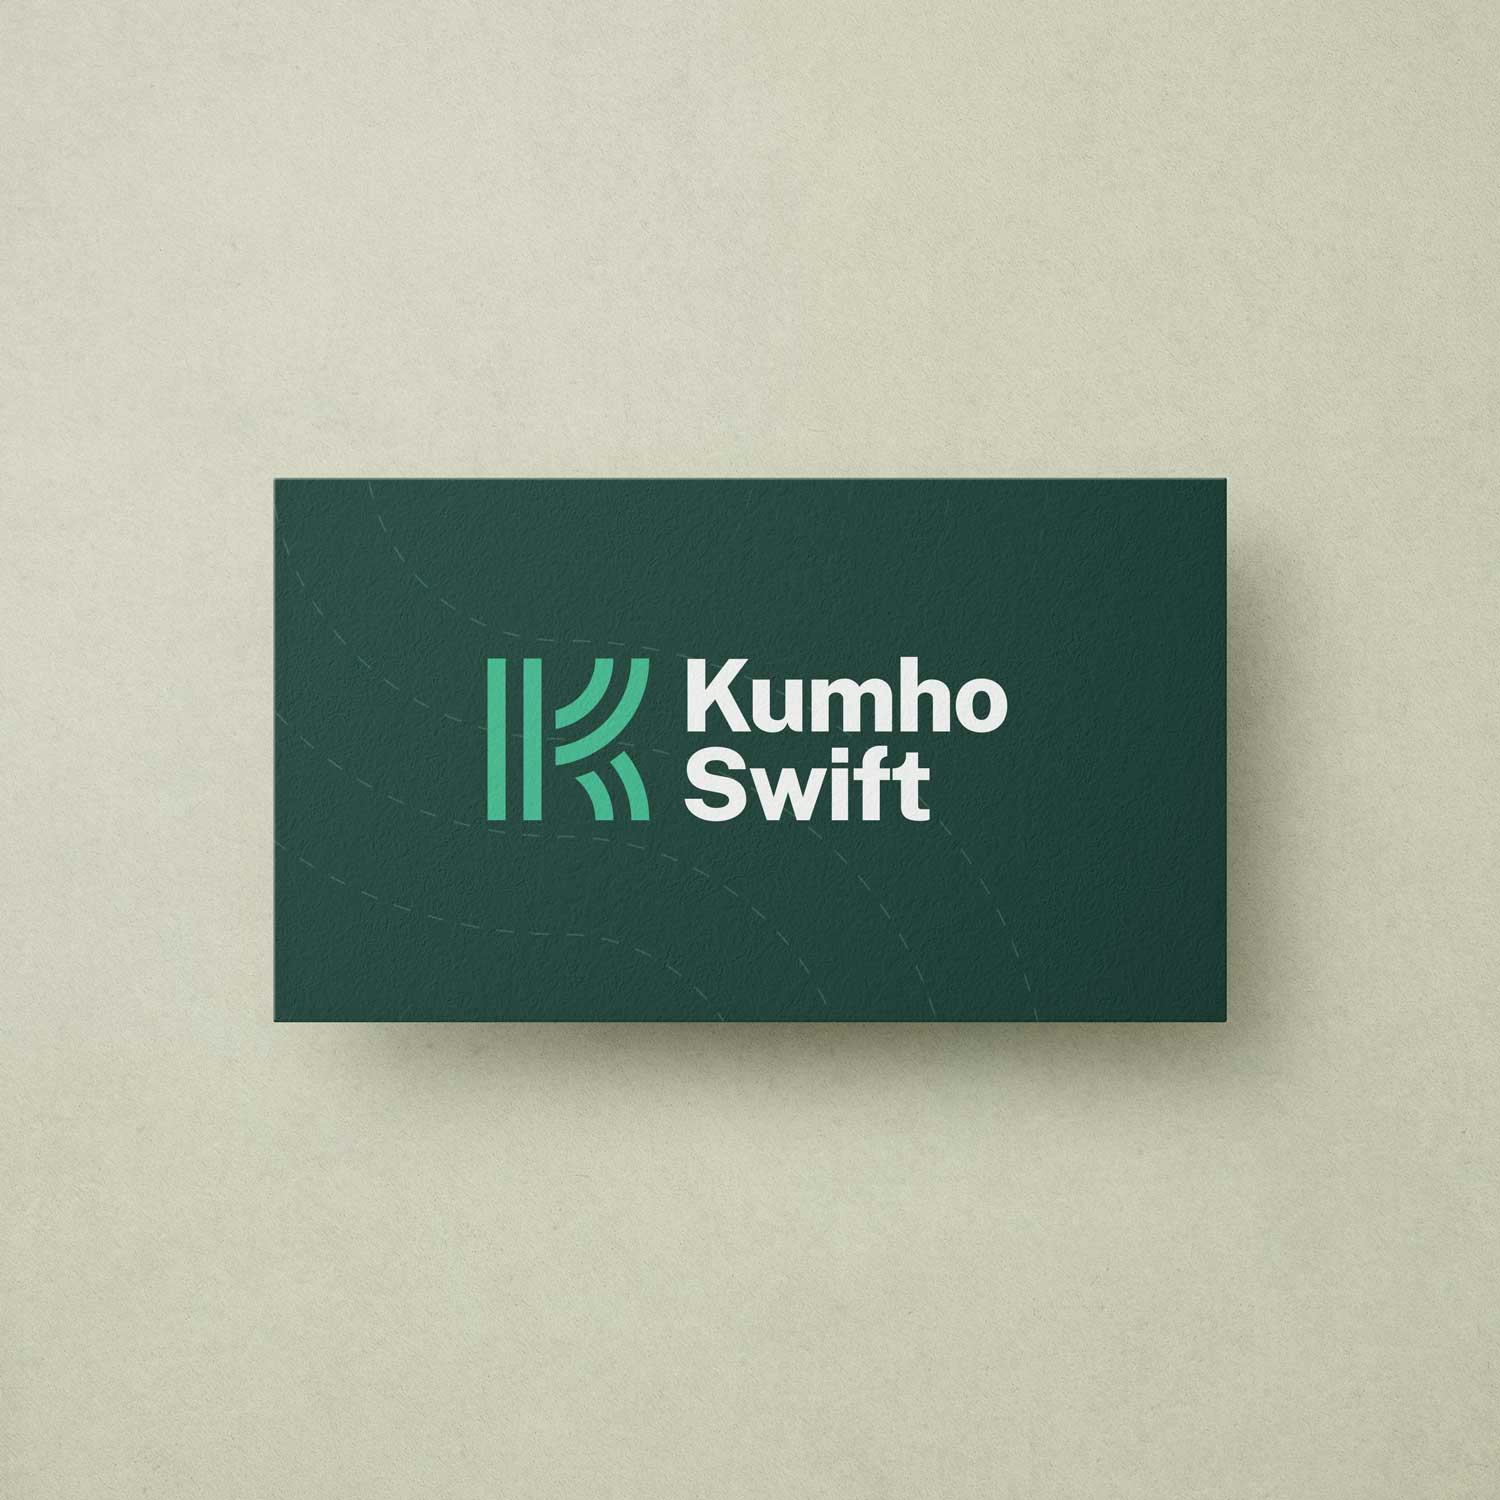 Kumho Swift business card